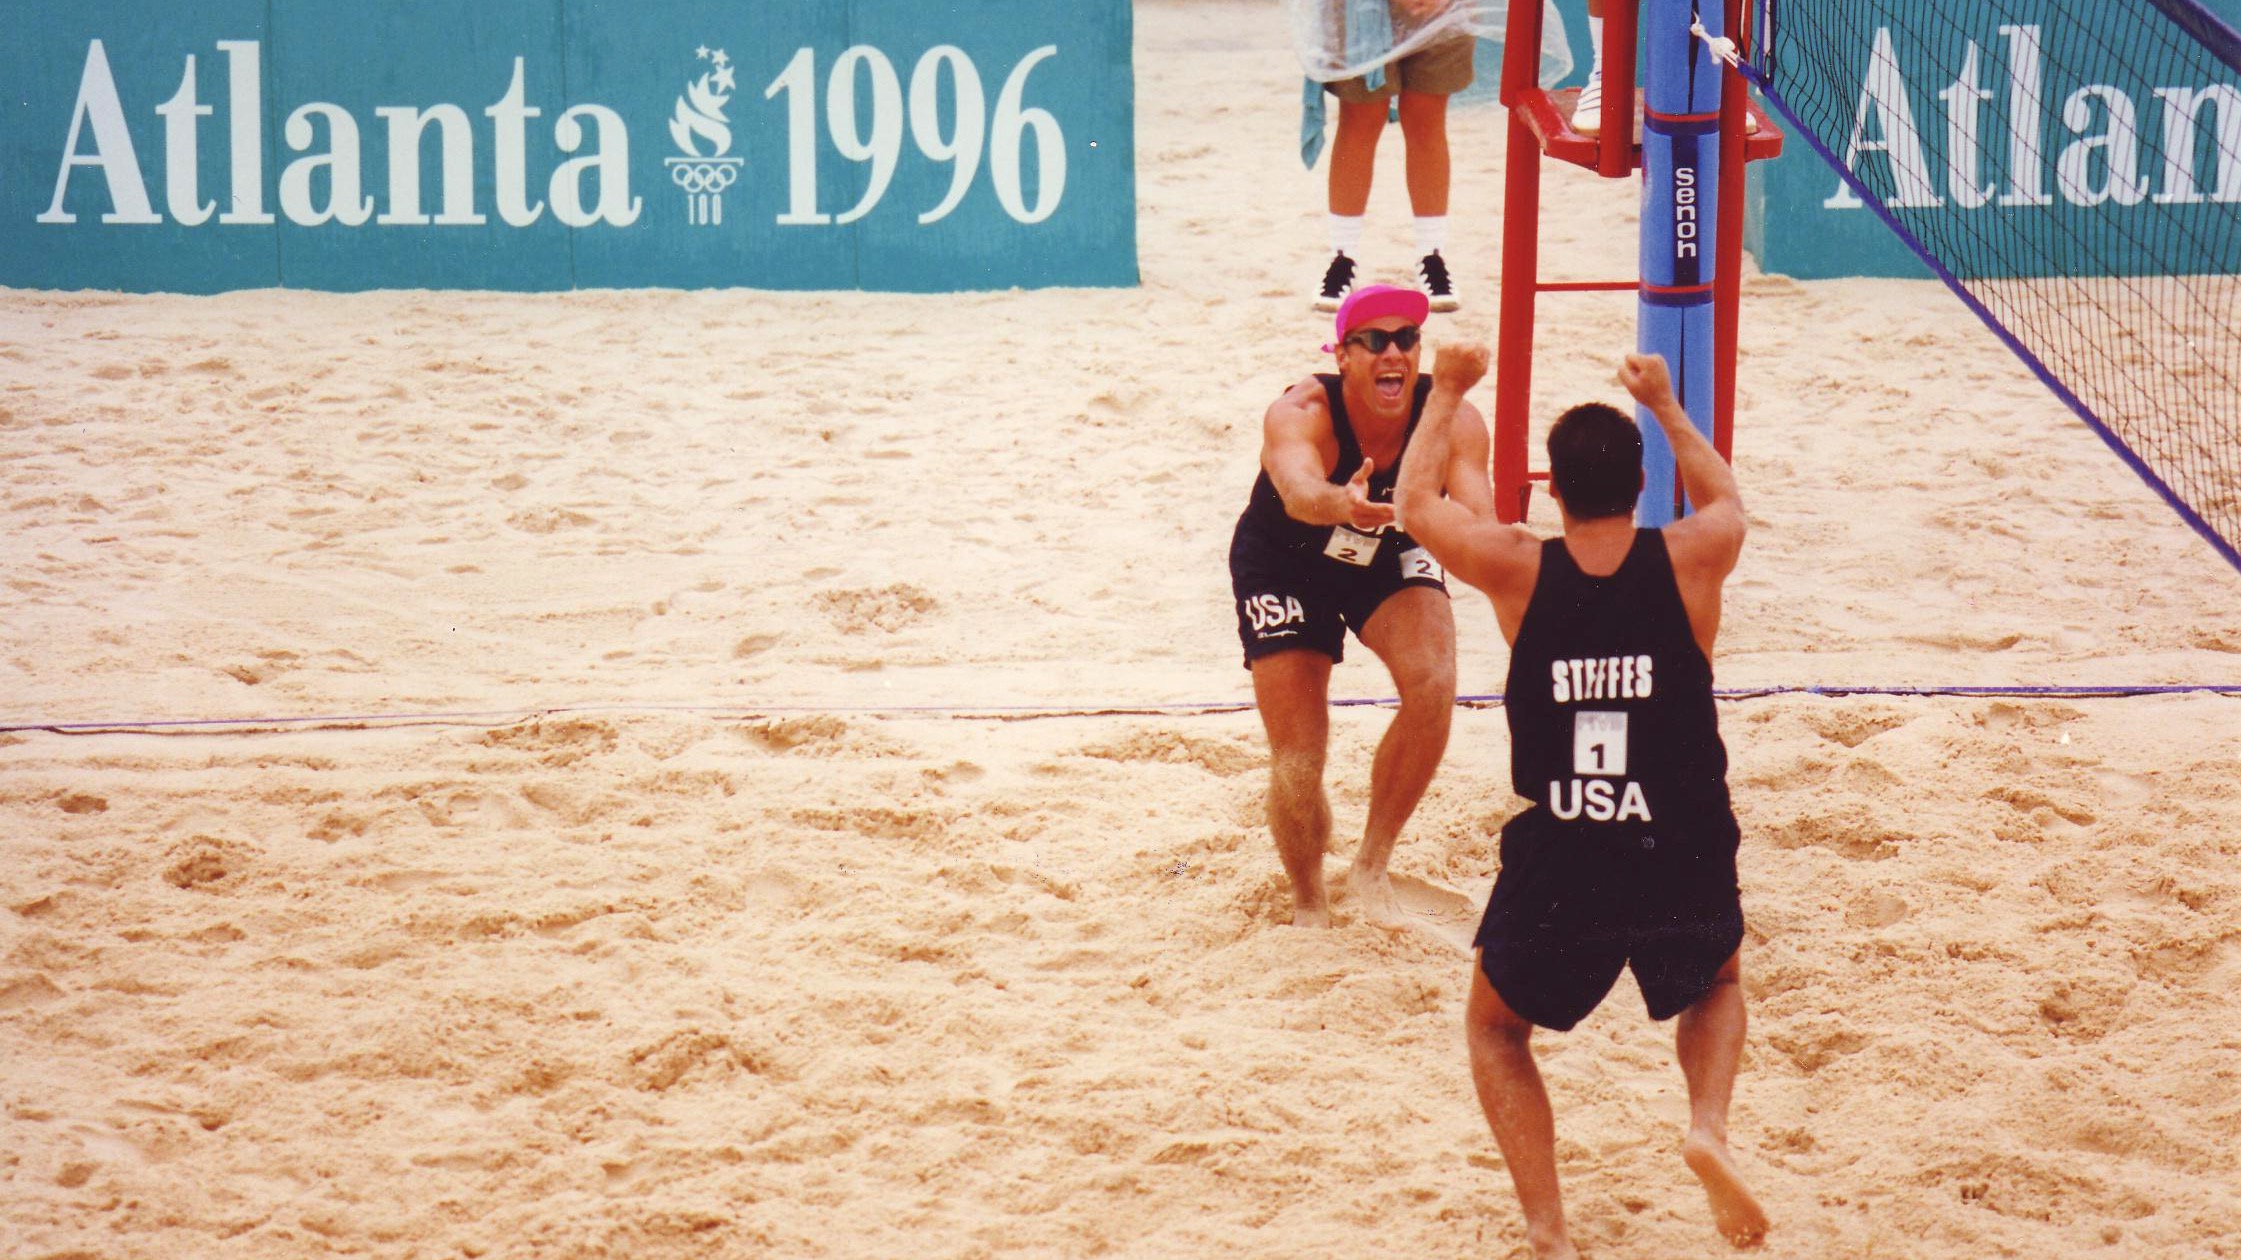 Atlanta 1996 Olympics Karch Kiraly Kent Steffes Beach volleyball